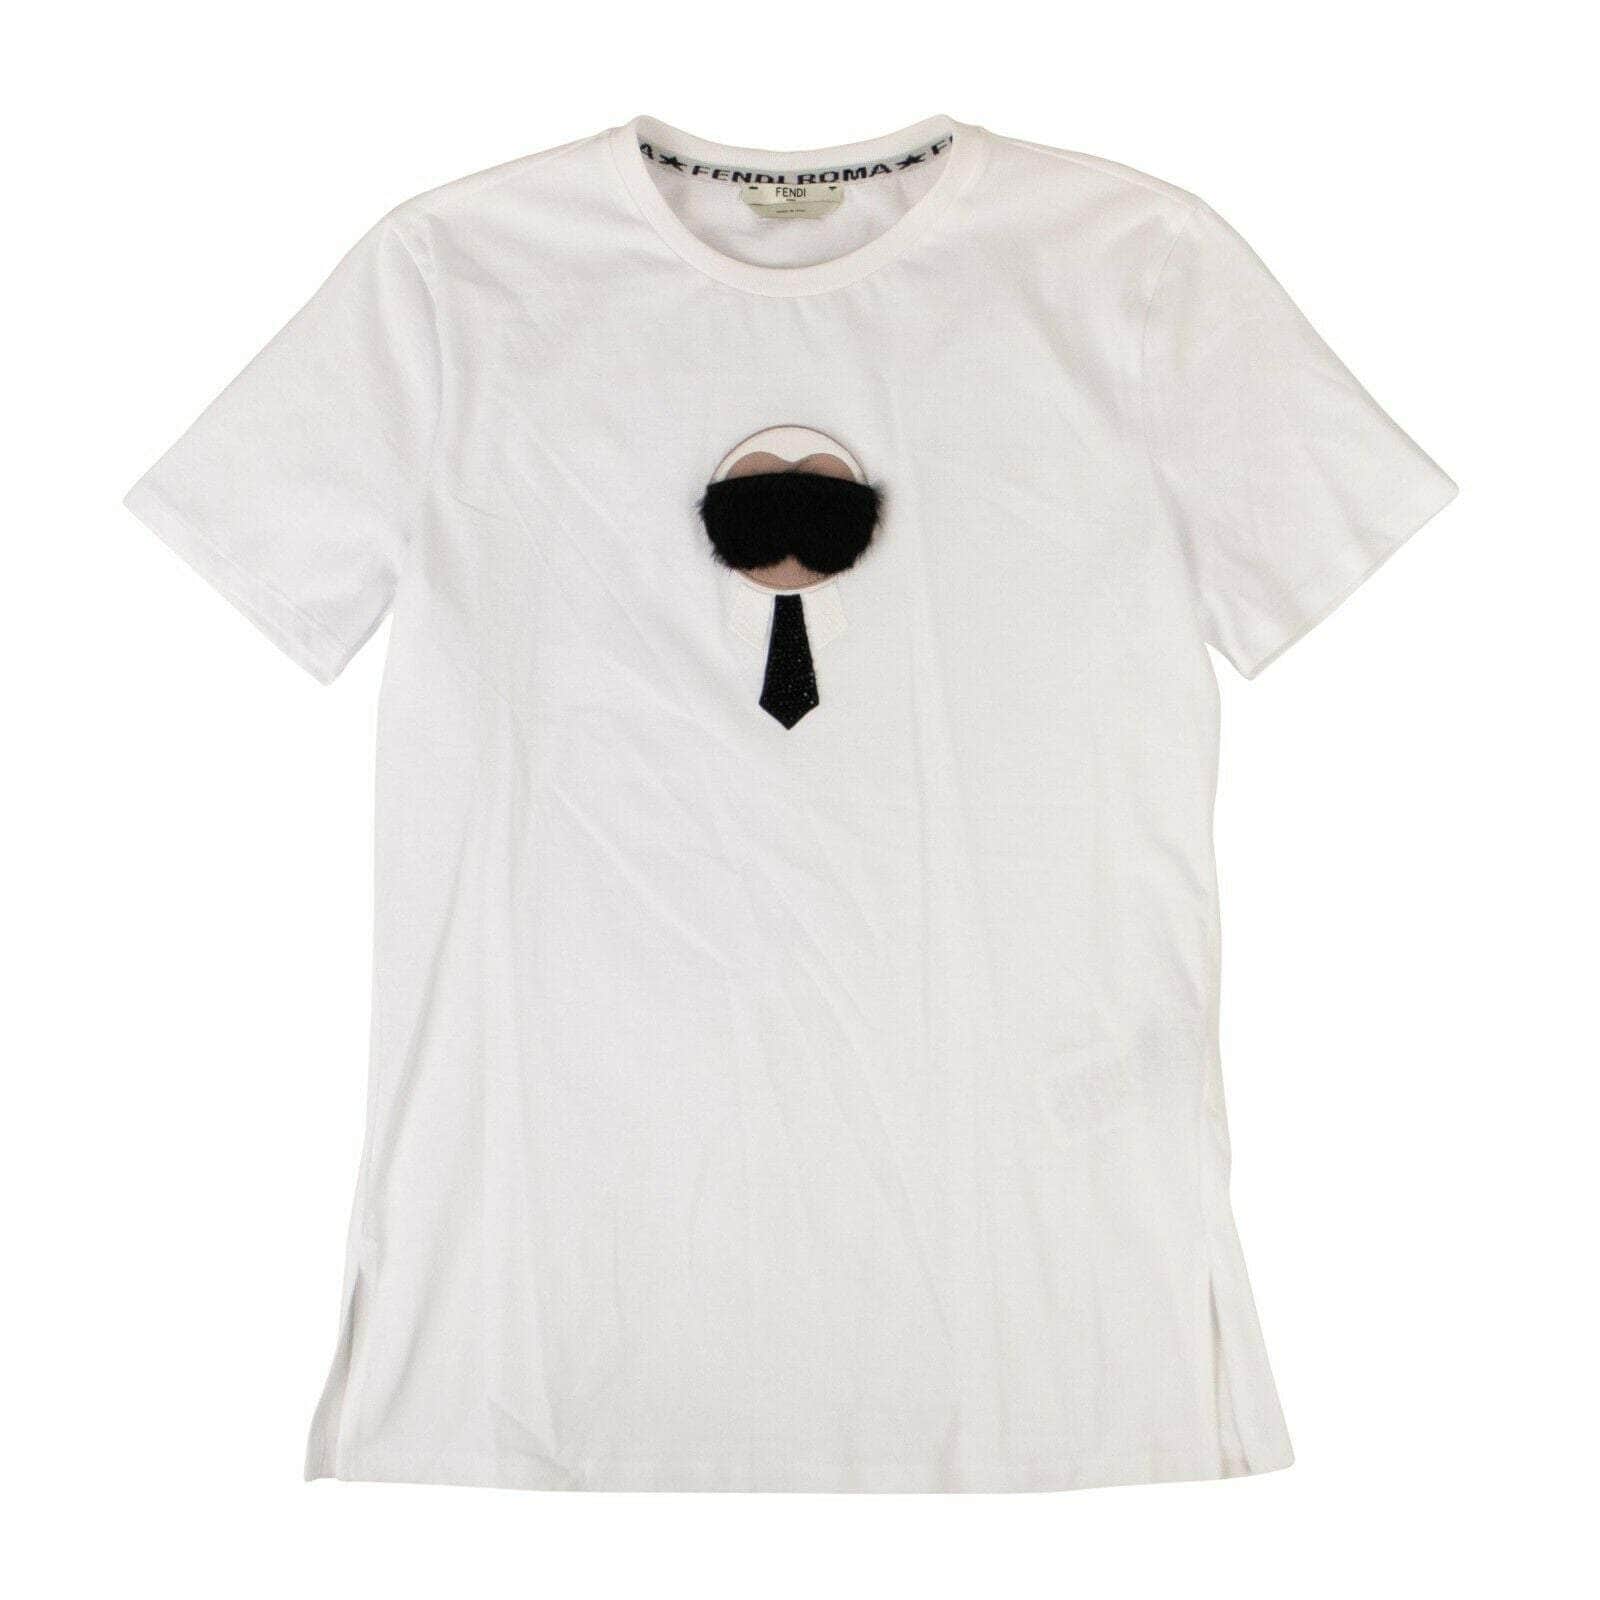 Fendi 250-500, chicmi, couponcollection, fendi, gender-womens, july4th, main-clothing, sale-enable, size-s, size-xs, size-xxs, t-shirt FENDI x KARL LAGERFELD Cotton 'Karl Monster' T-Shirt - White